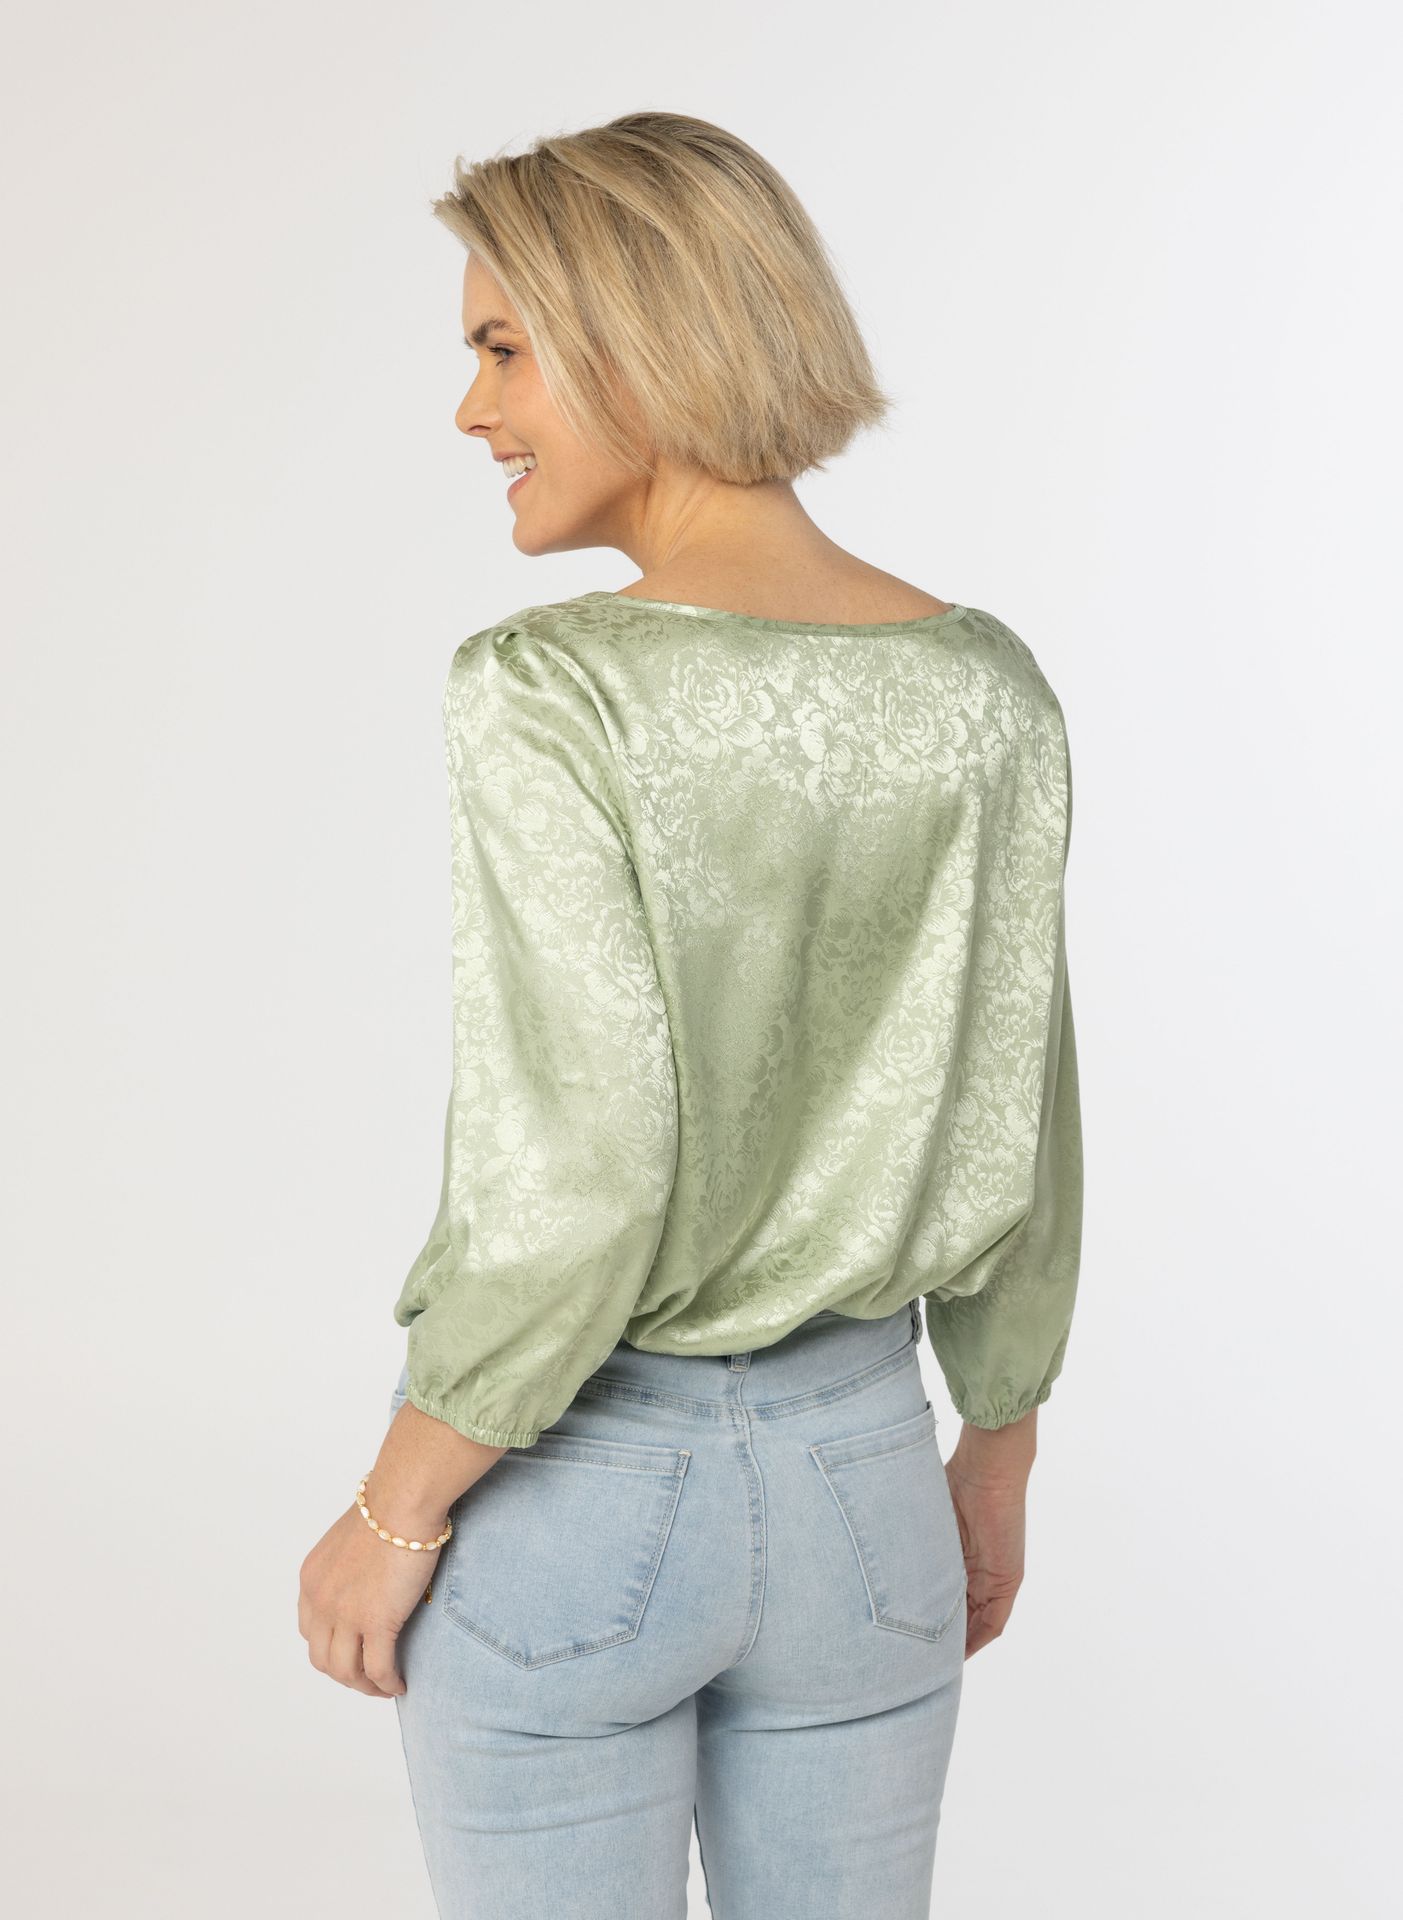 Norah Mintgroene glanzende blouse green 214135-500